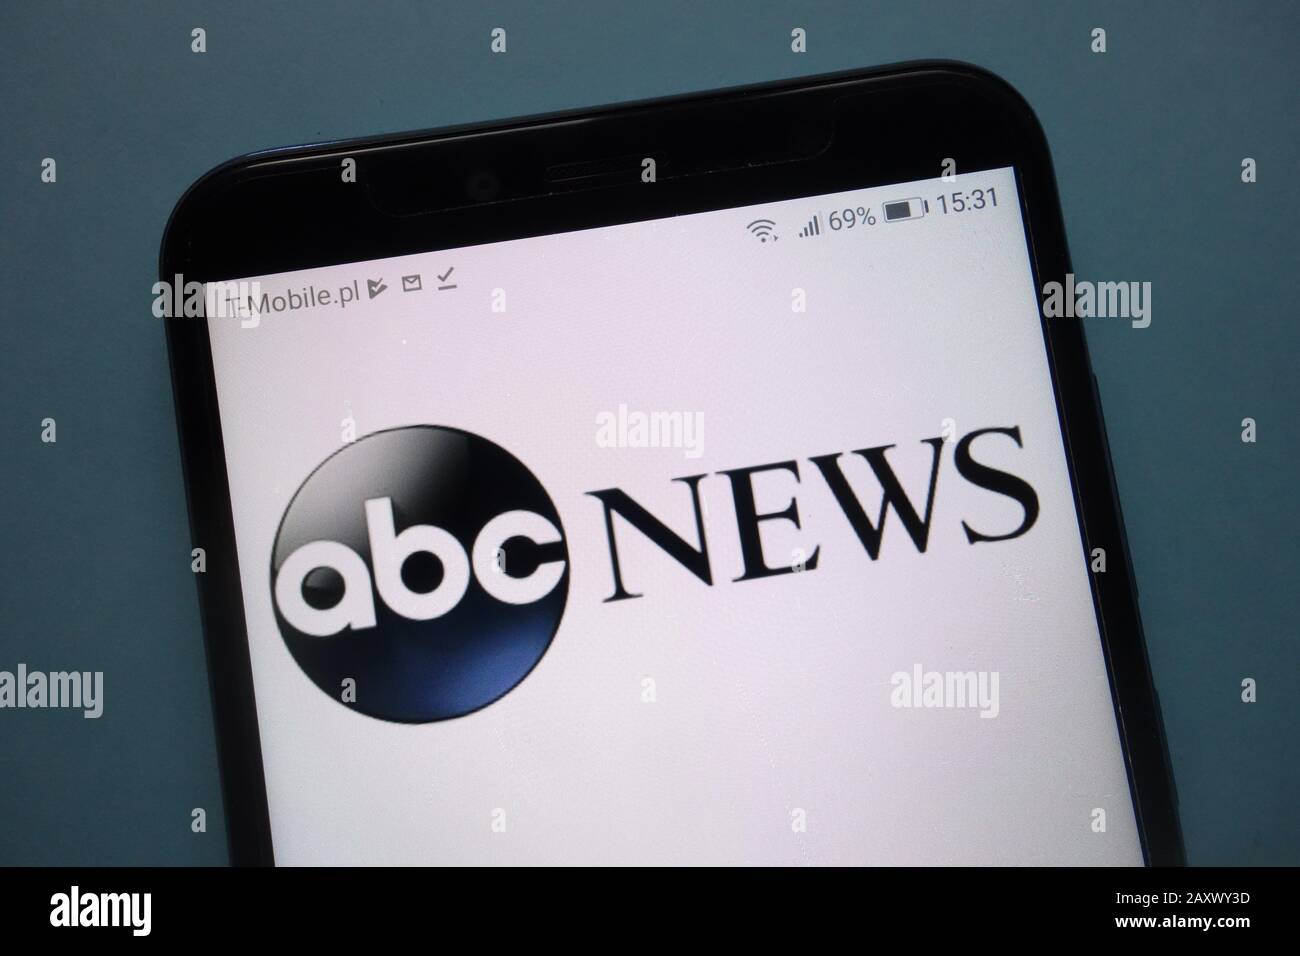 ABC News logo displayed on smartphone Stock Photo